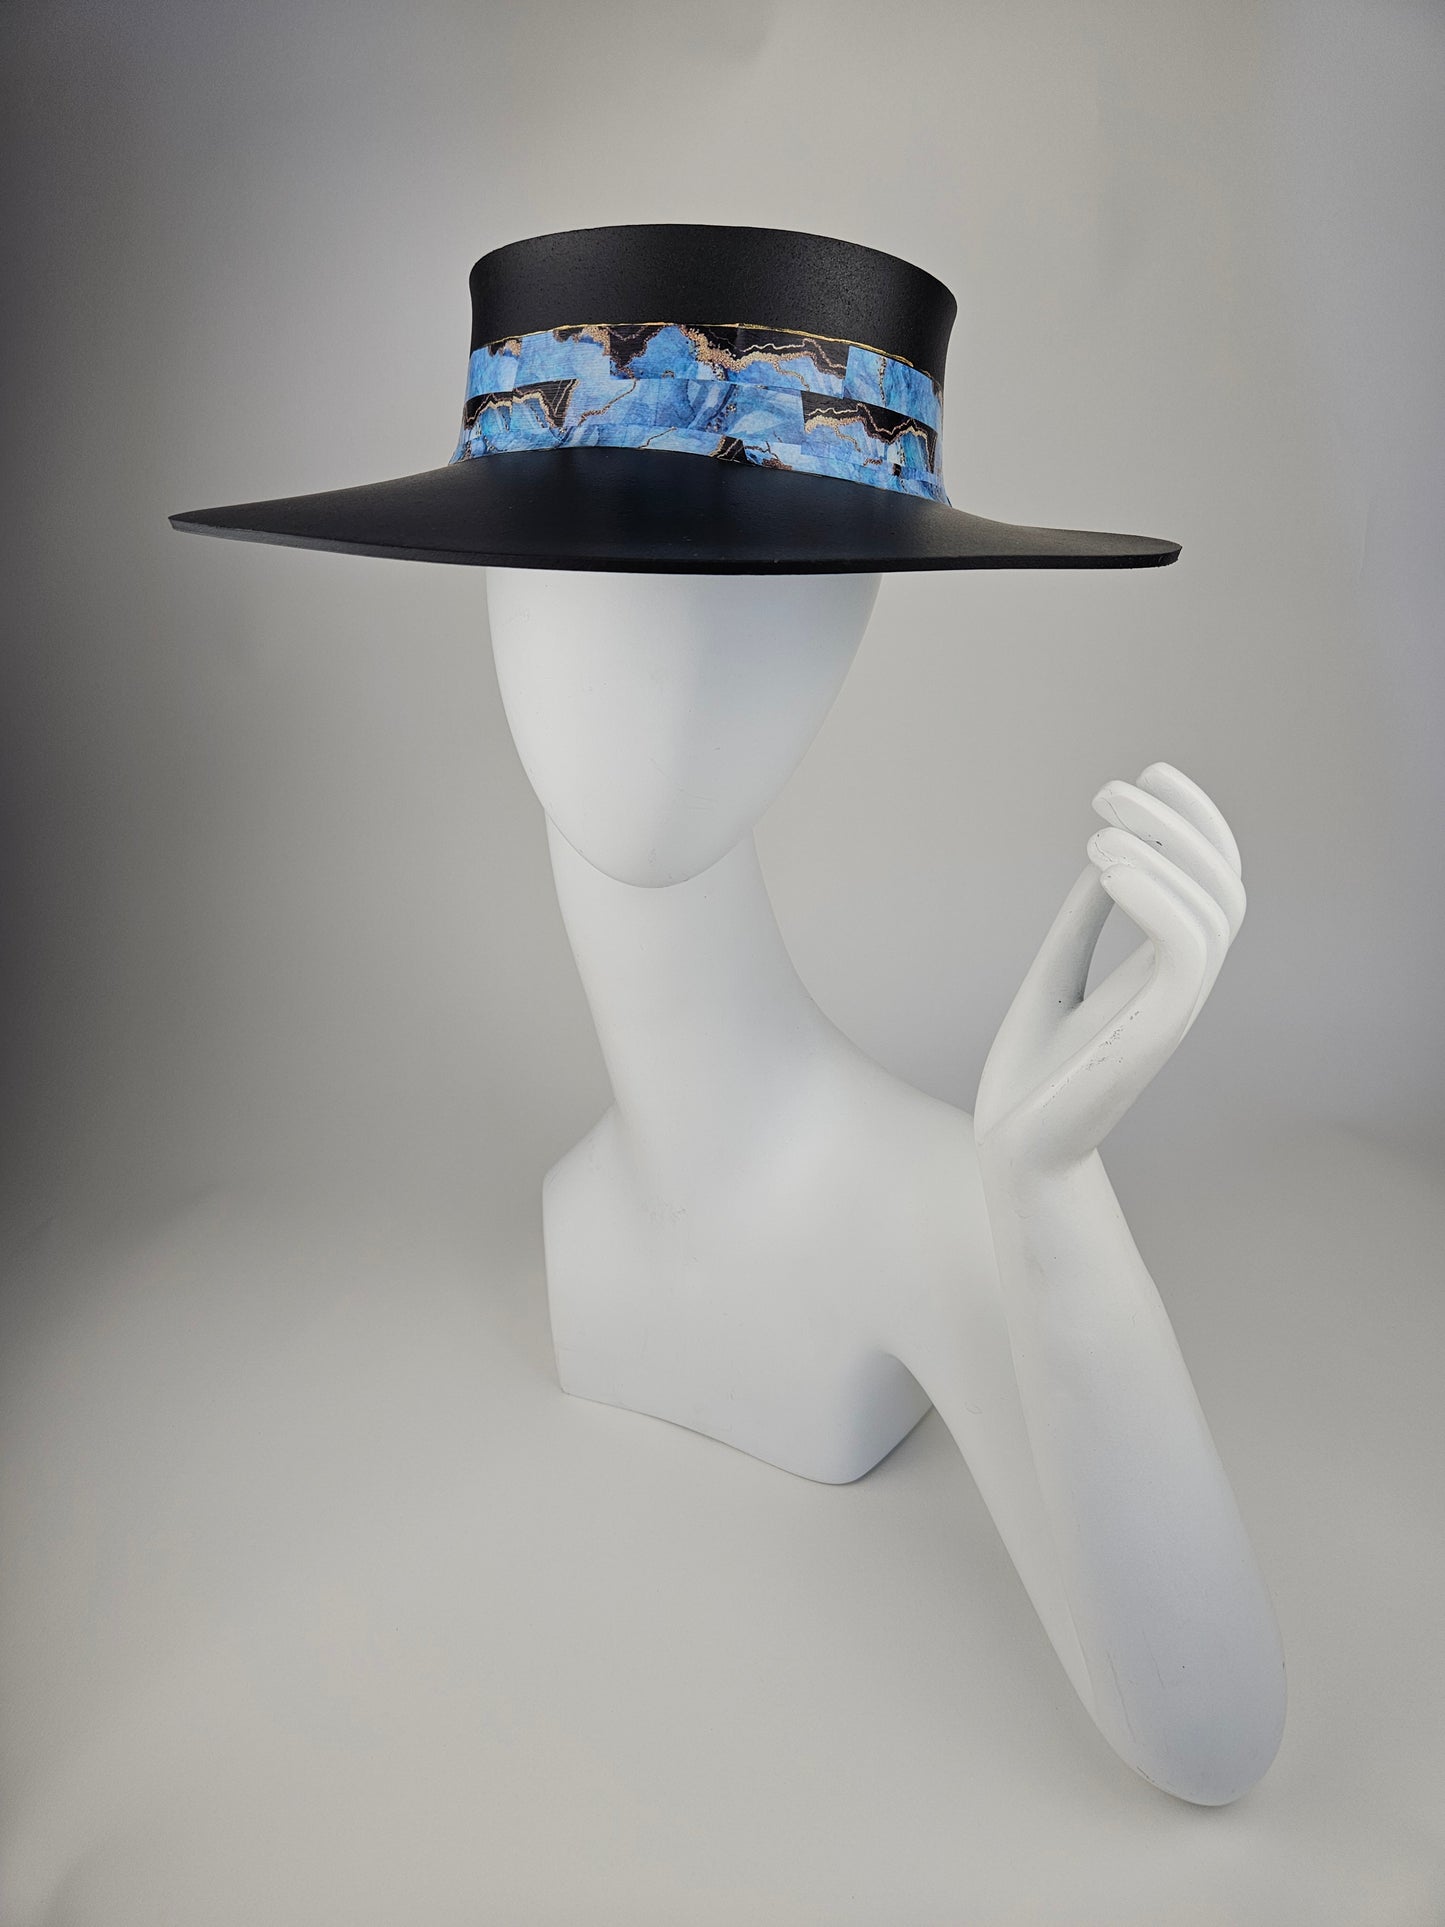 Timeless Black Audrey Foam Sun Visor Hat with Elegant Marbled Blue Band: 1920s, Walks, Brunch, Tea, Golf, Wedding, Church, No Headache, Easter, Pool, Beach